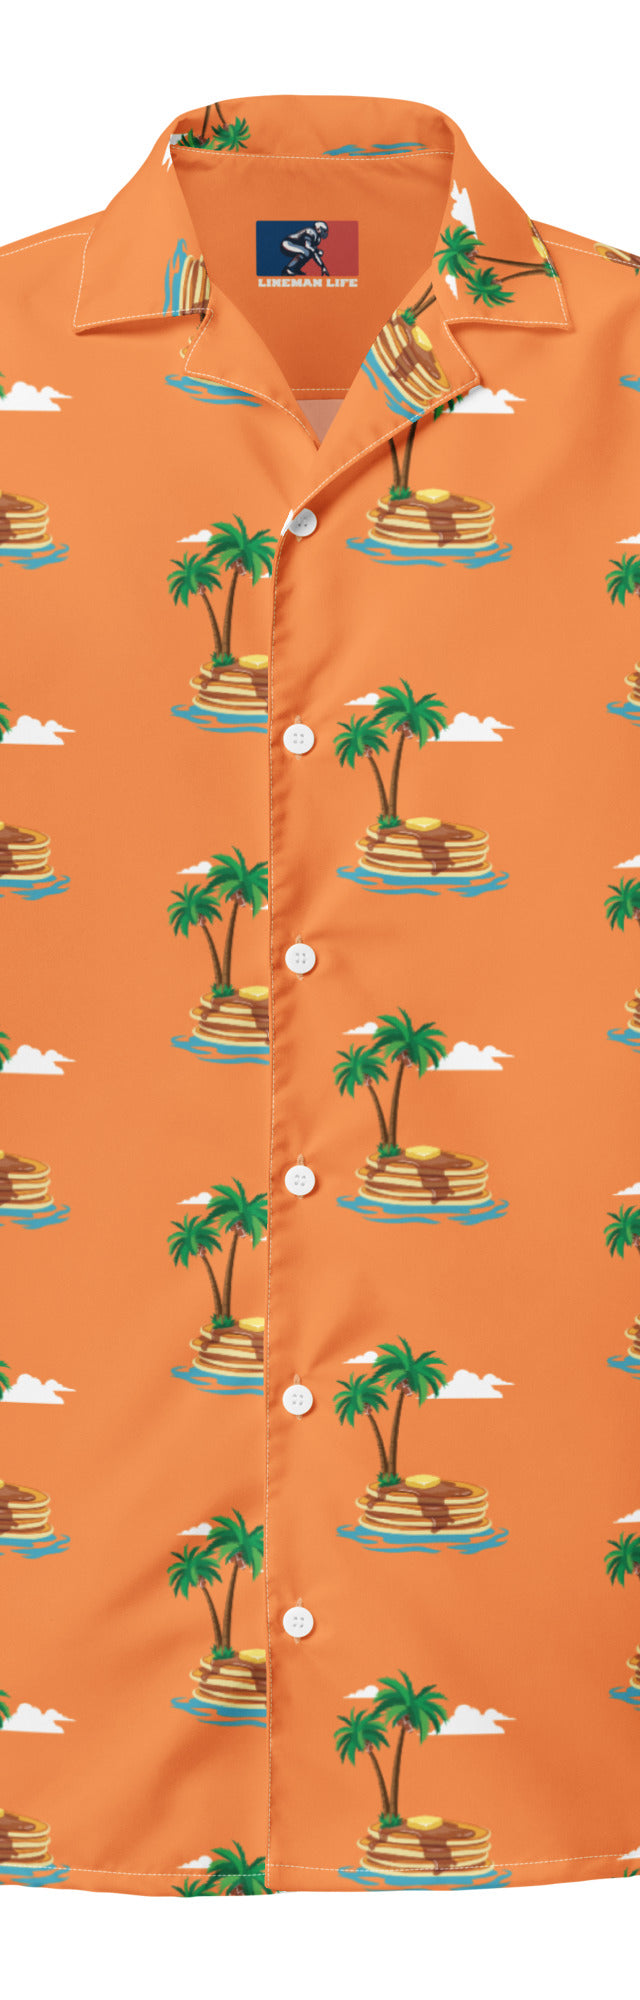 Pancakes and Palm Trees - Orange